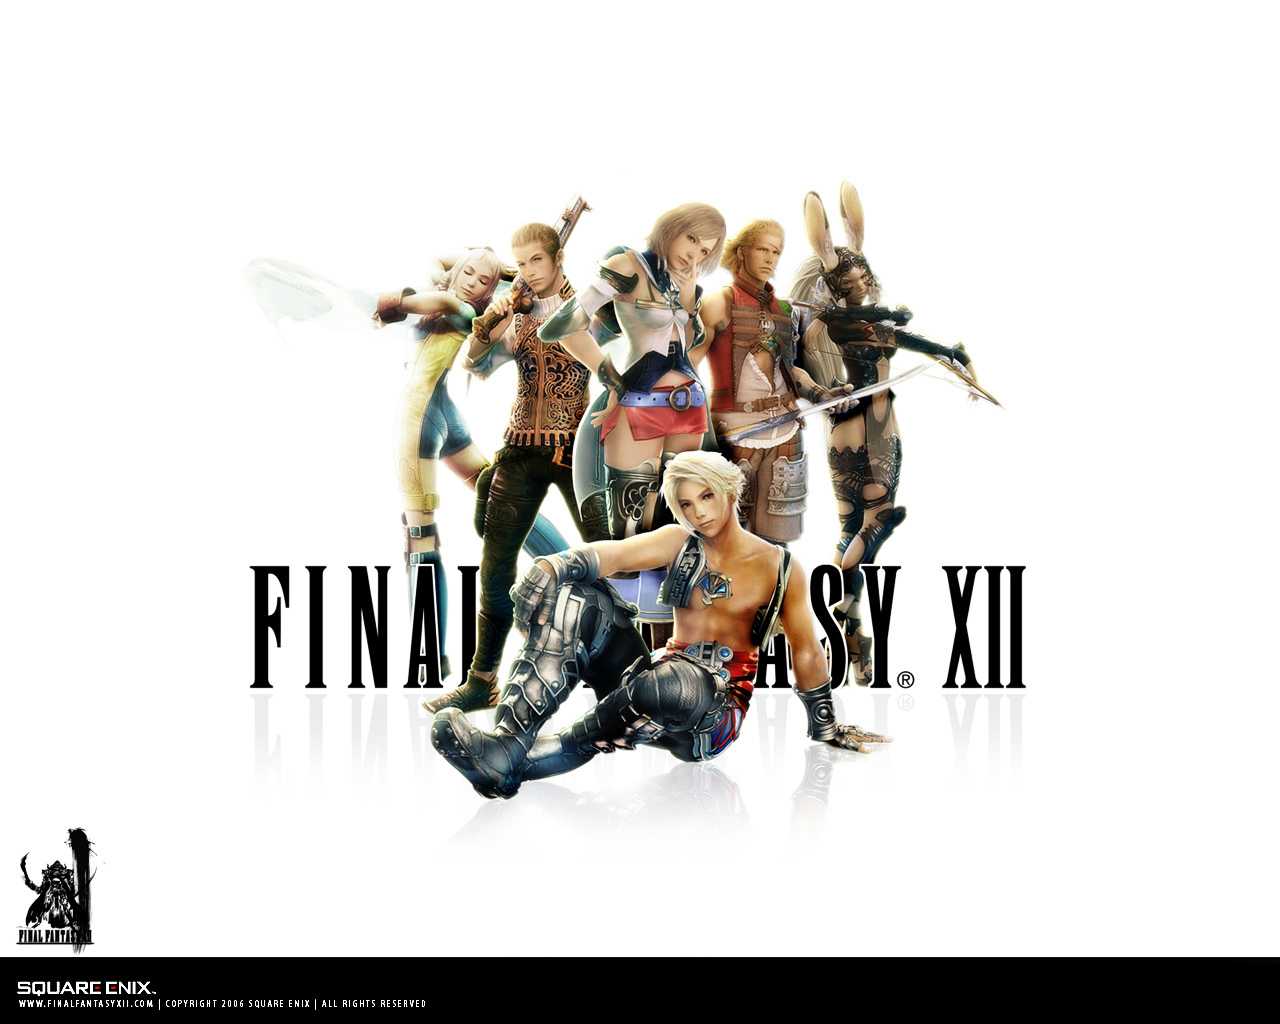 Final Fantasy X-2 characters, Final Fantasy Wiki